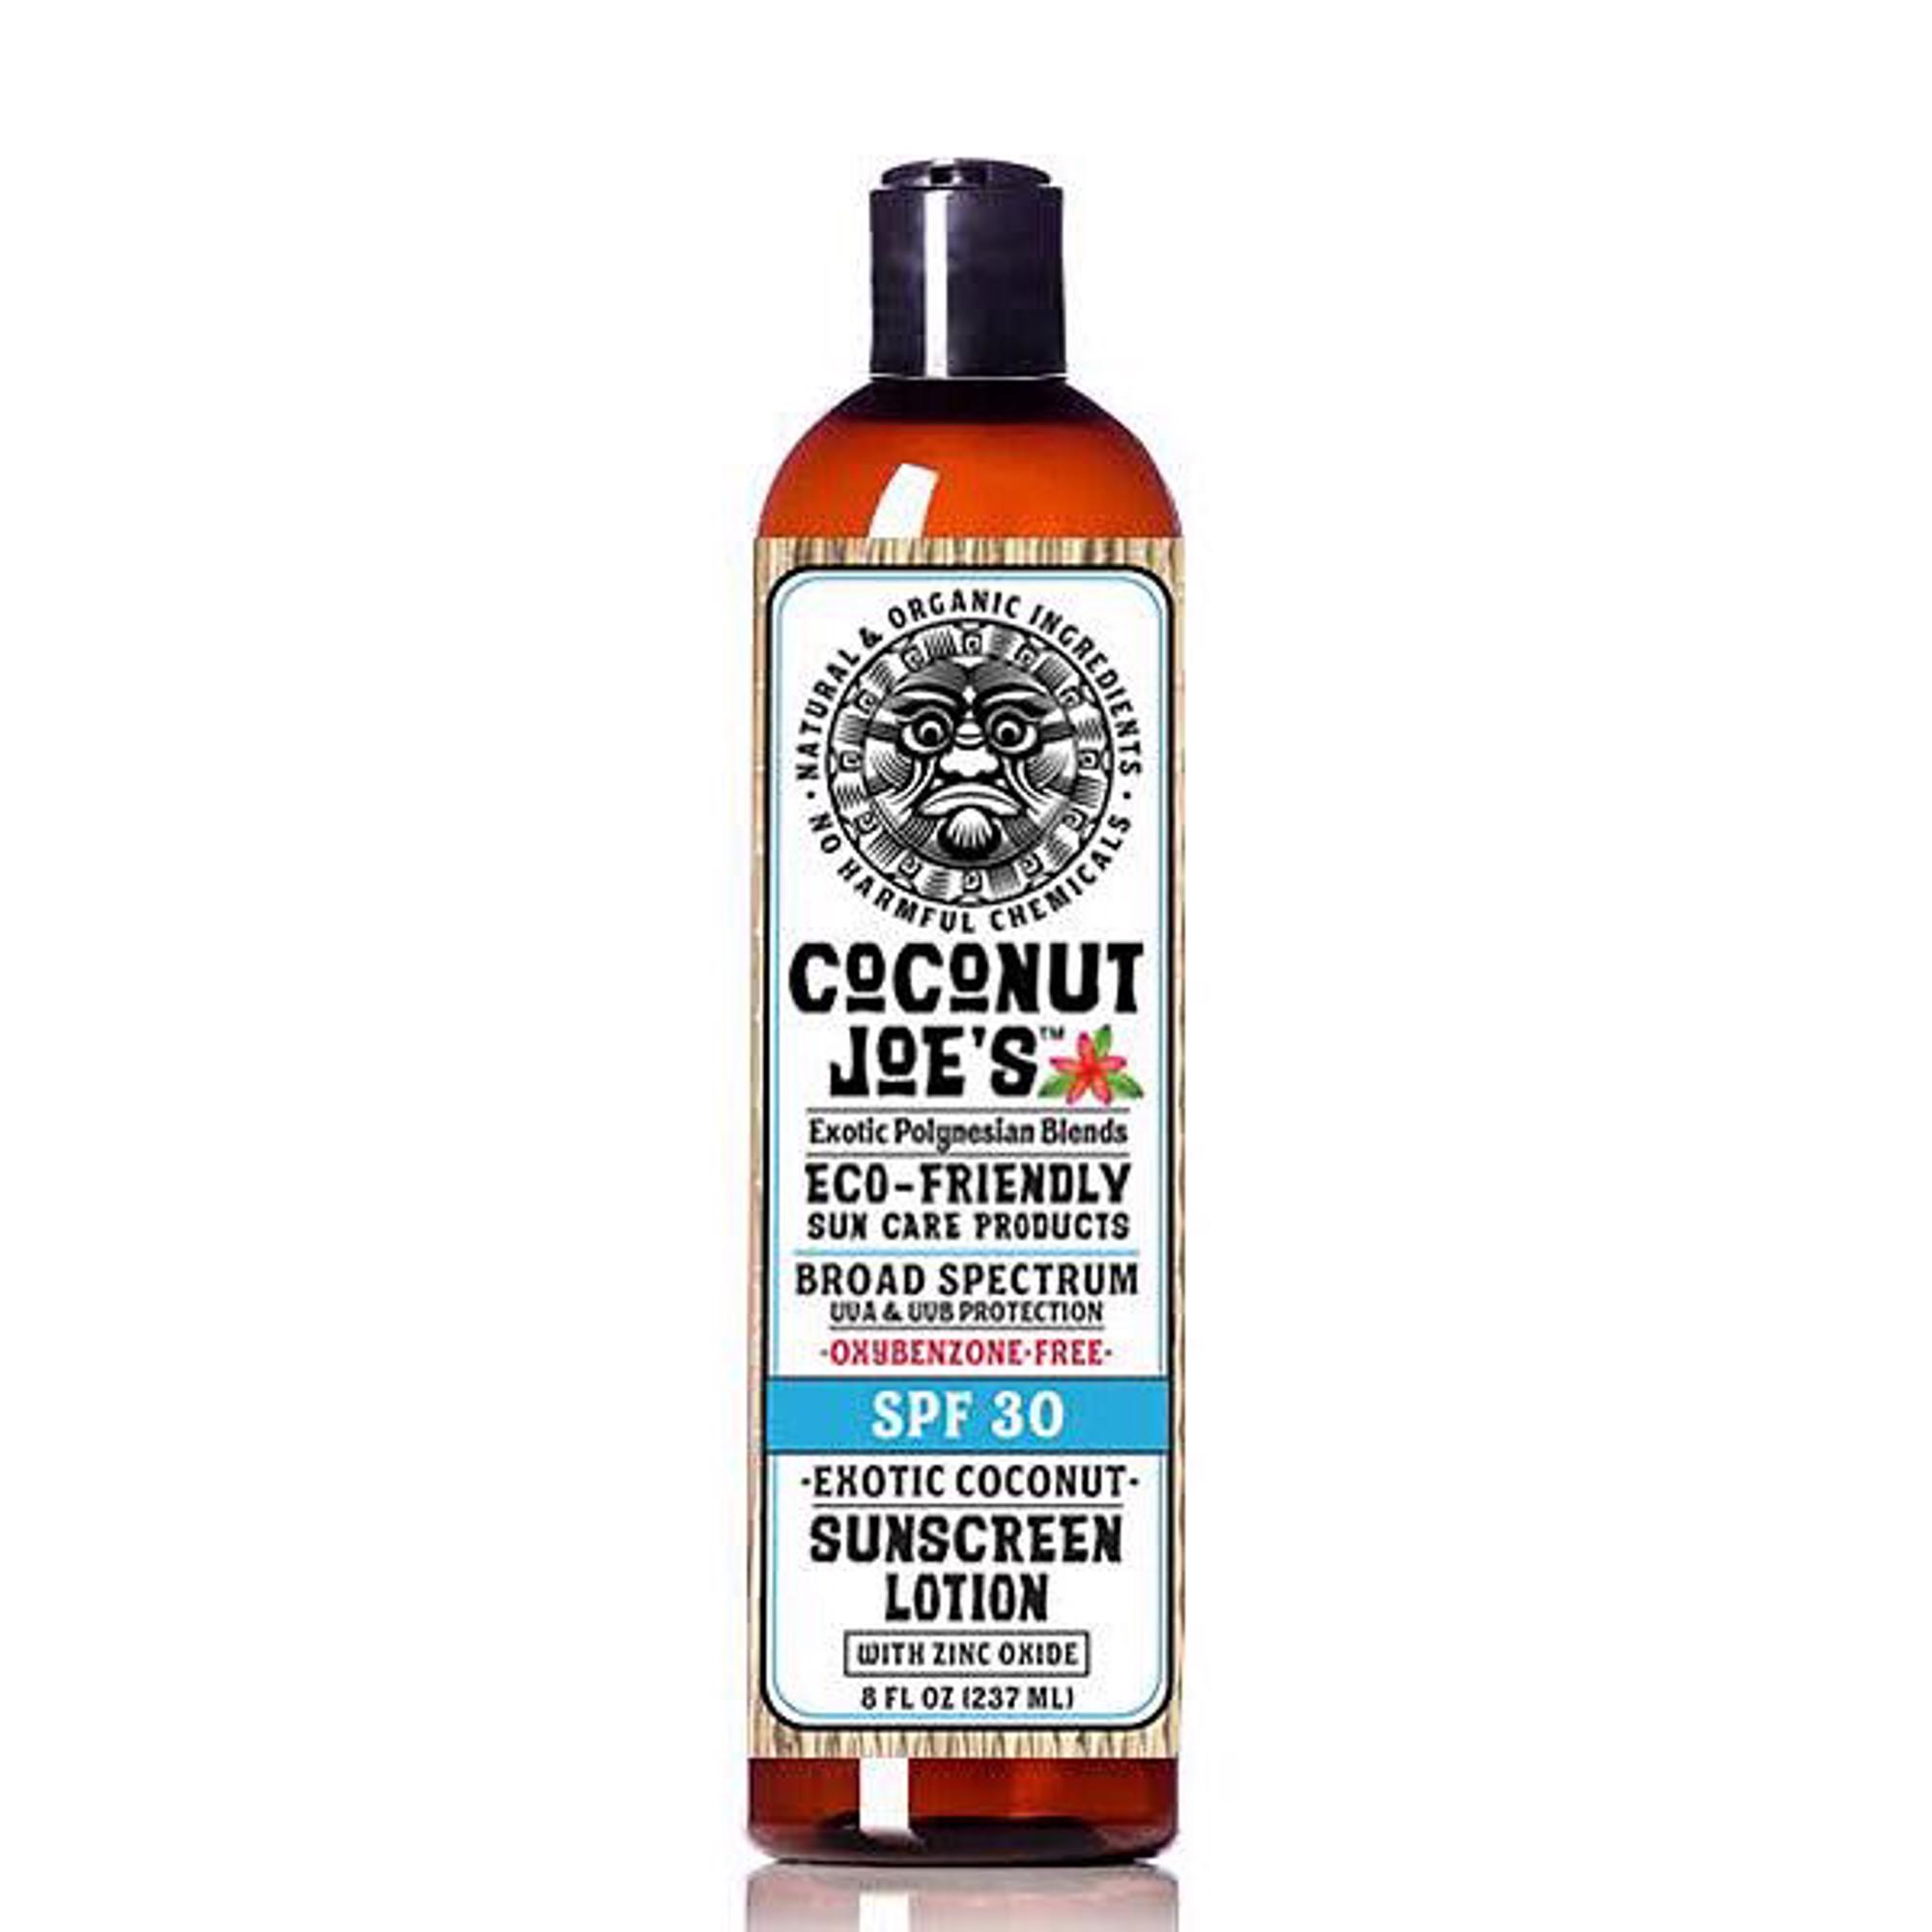 Coconut Joe's Zinc Oxide Exotic Coconut Sunscreen - SPF 30